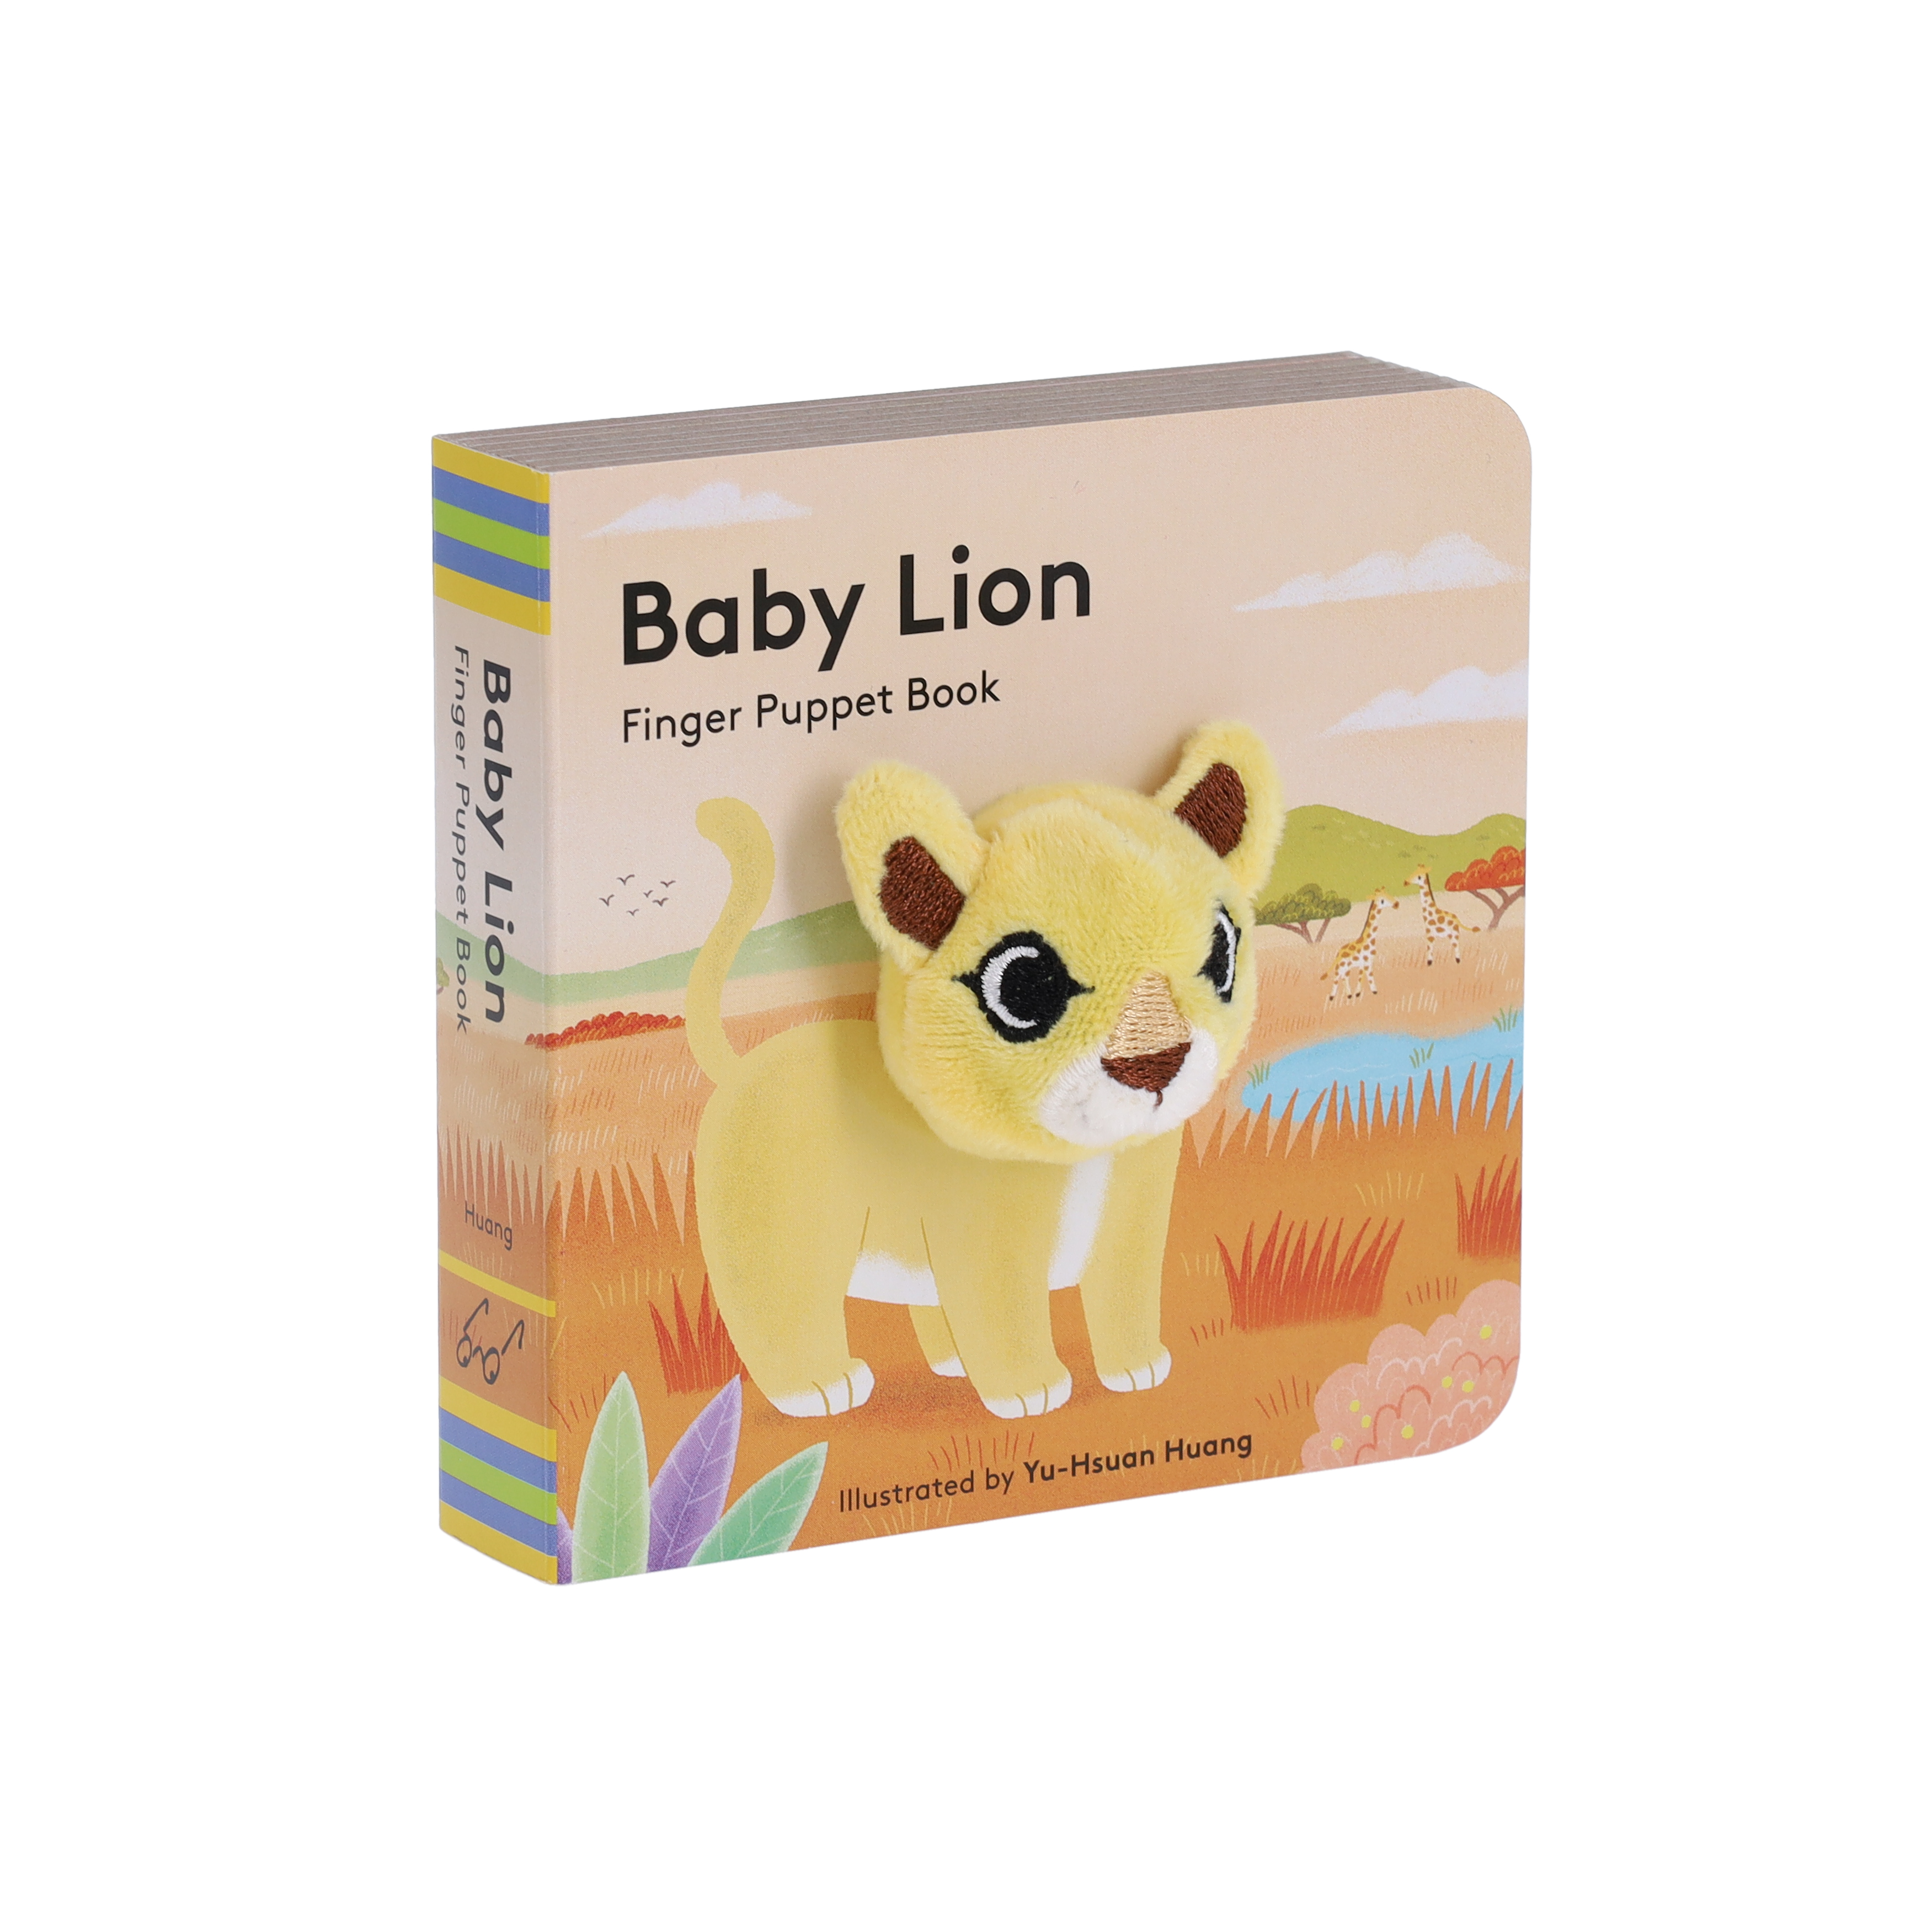 Baby Lion: Finger Puppet Book